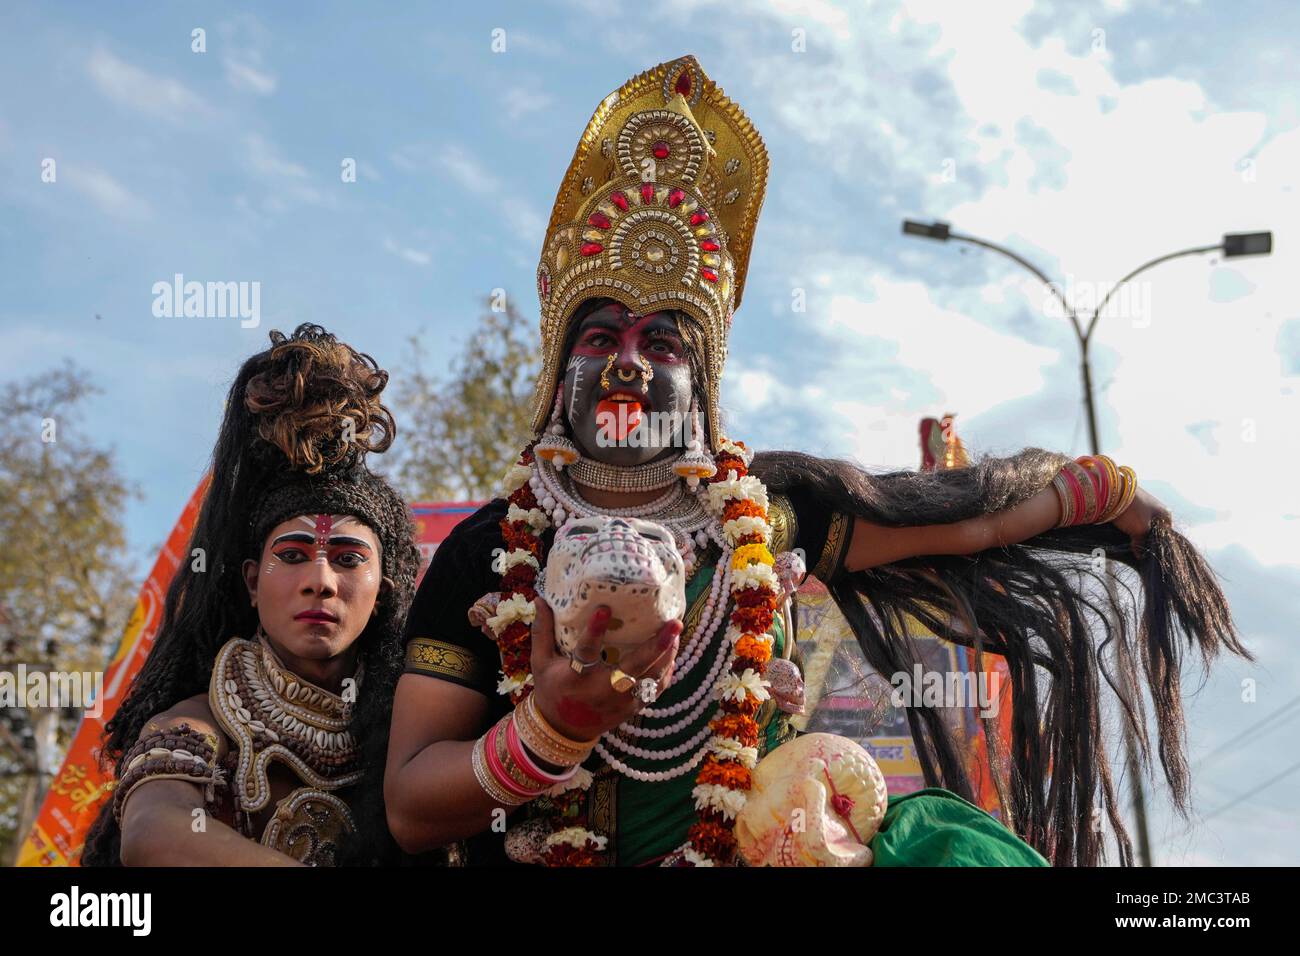 Devotees dressed as Hindu god Shiva and goddess Kali participate ...